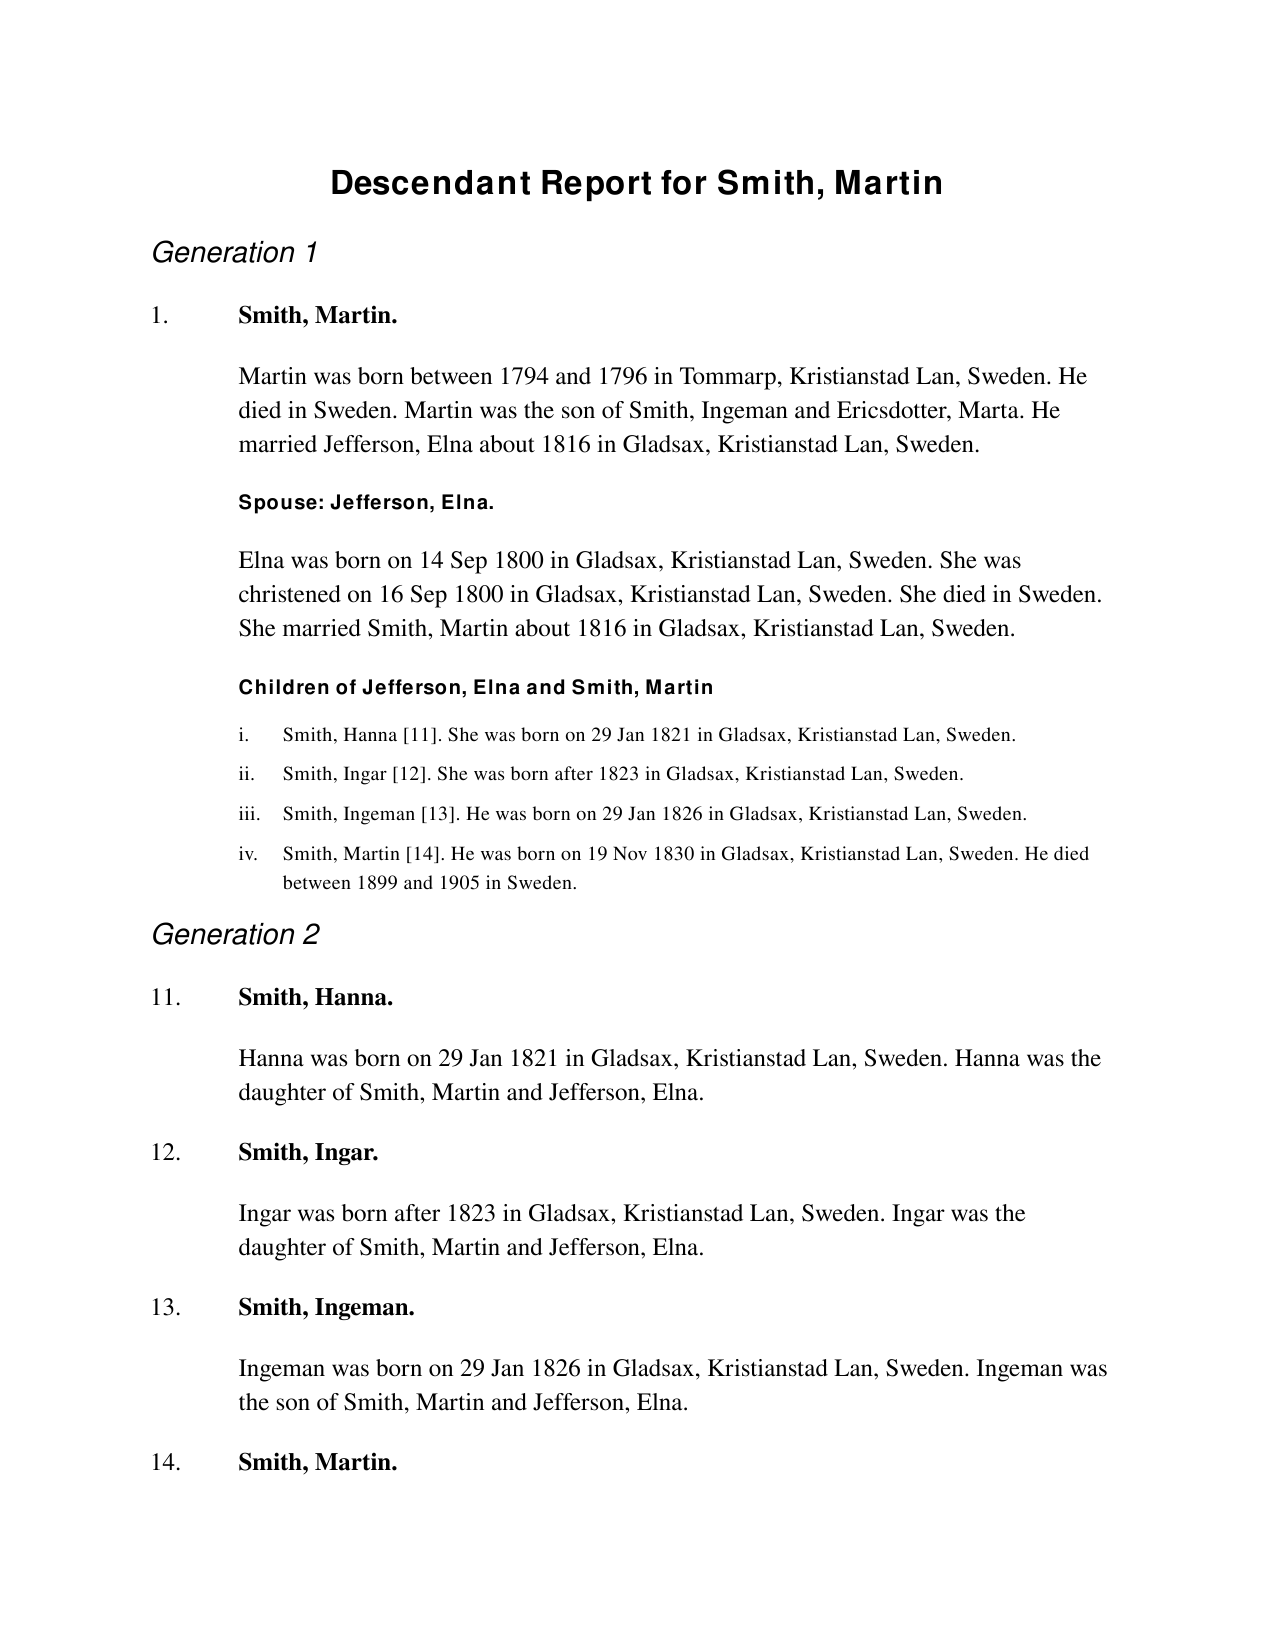 Detailed Descendant Report.pdf.png